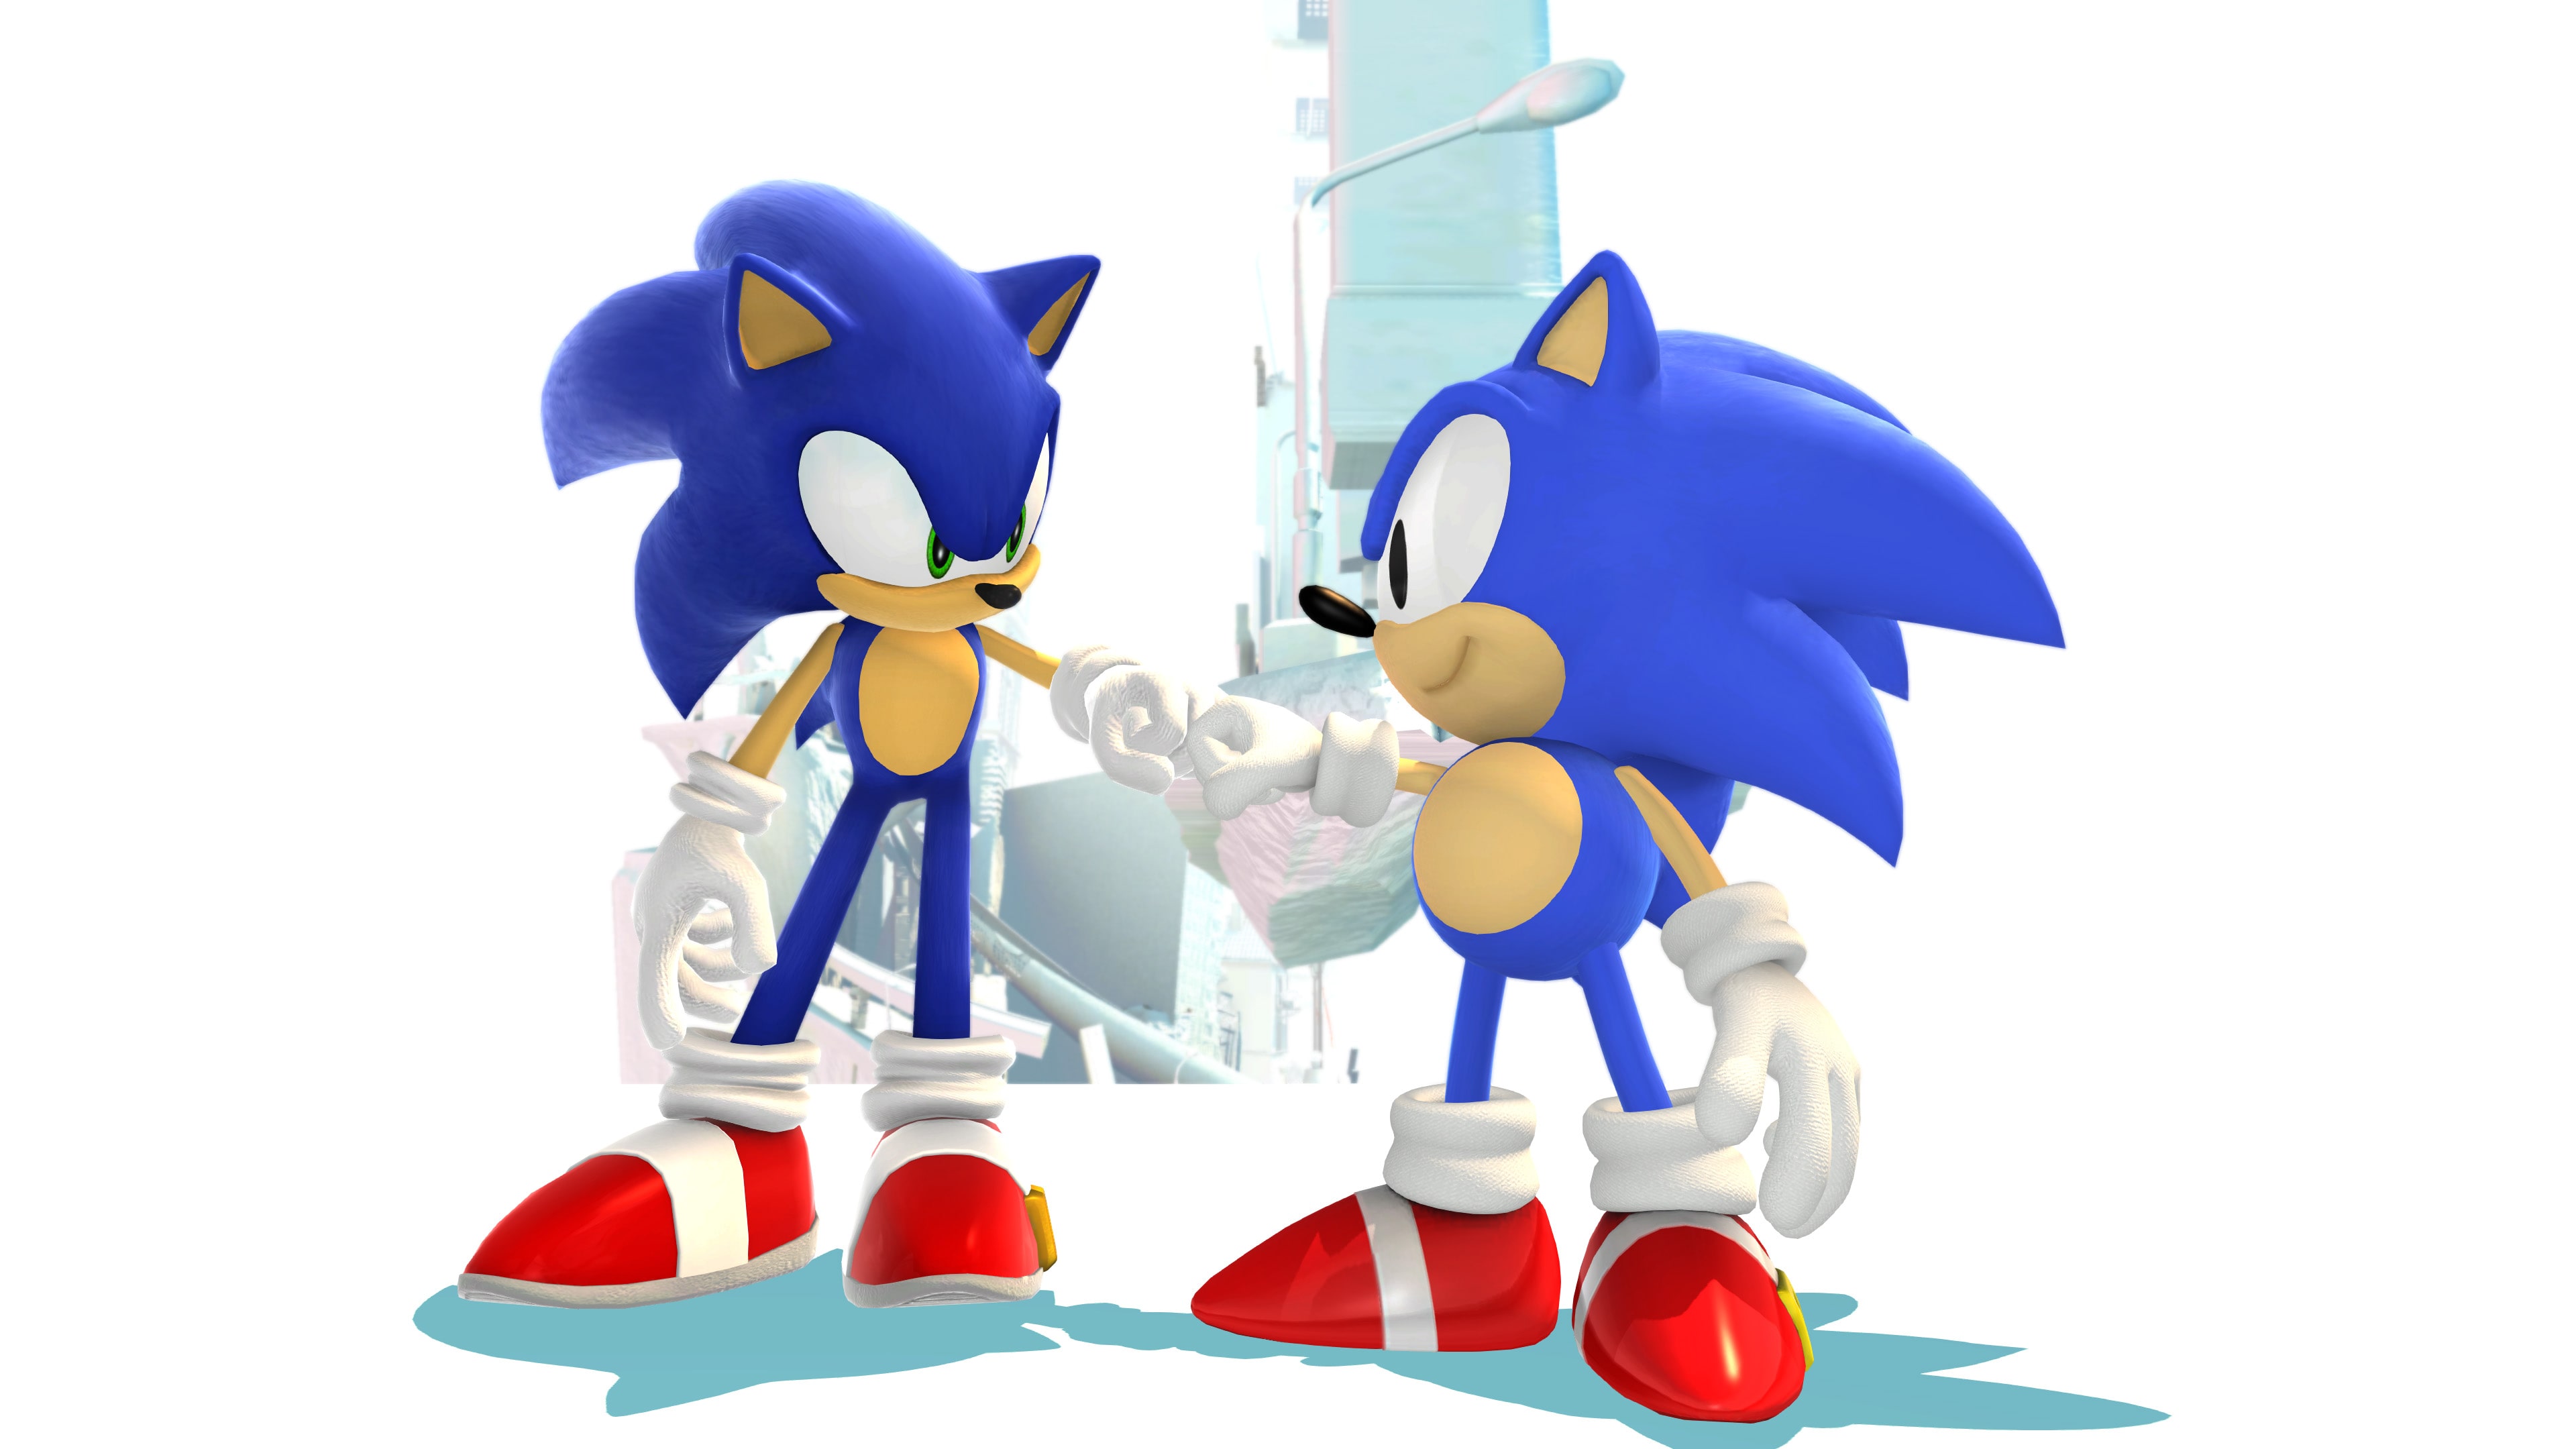 Sonic X Shadow Generations - Prevendita PS5 [Versione EU Multilingue] -   di GmDistribuzioni srl